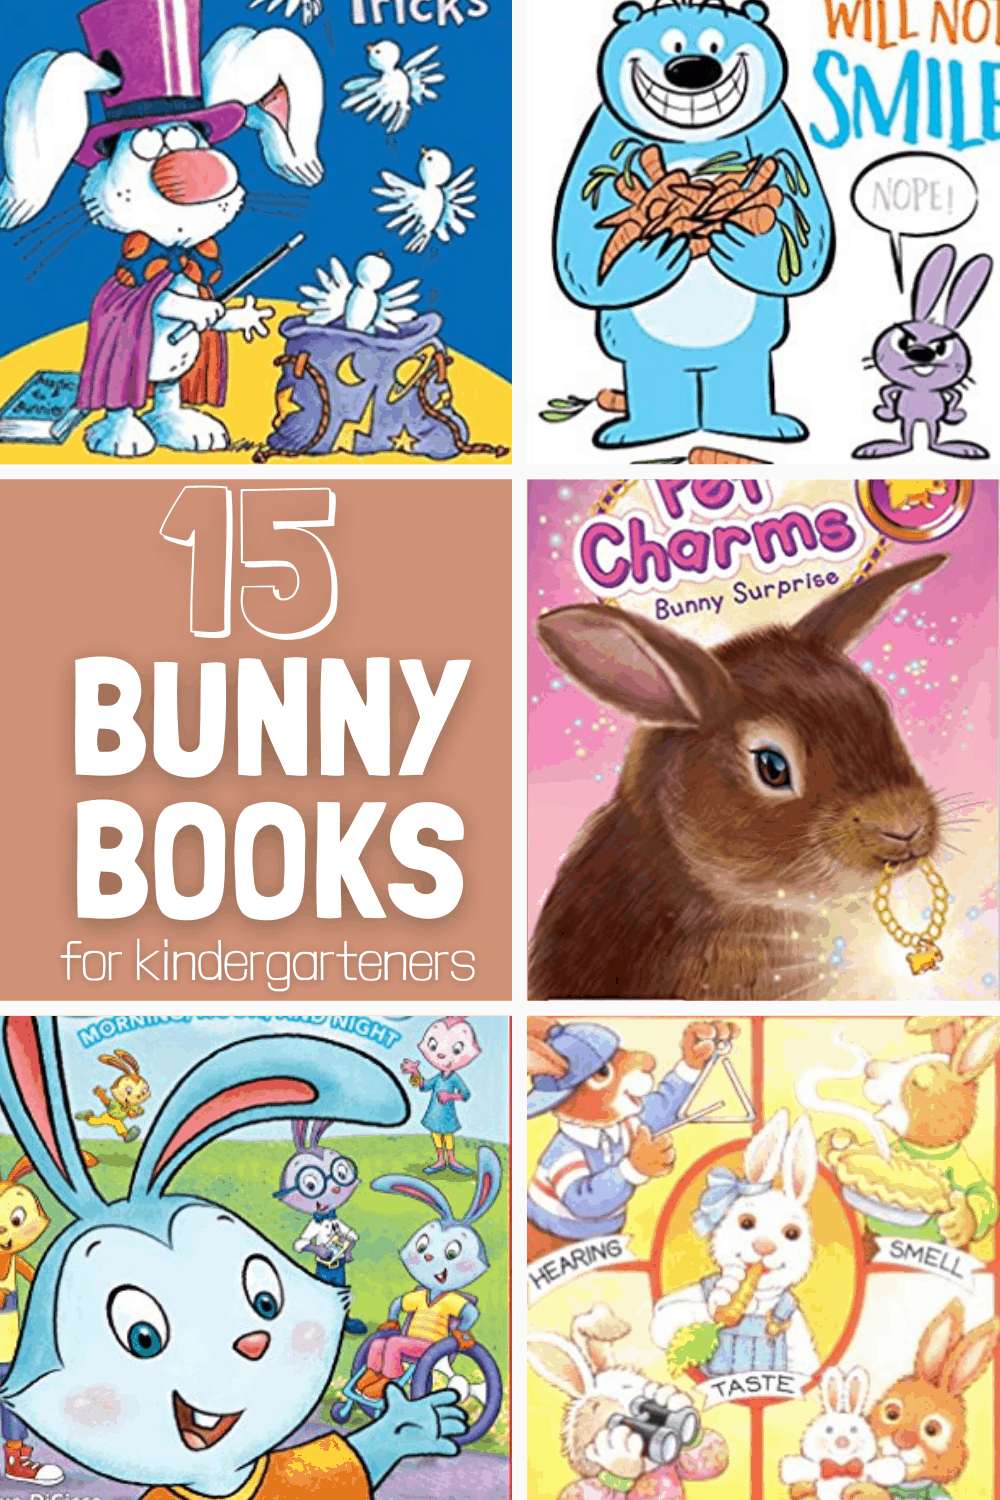 Bunny Books for Kindergarten